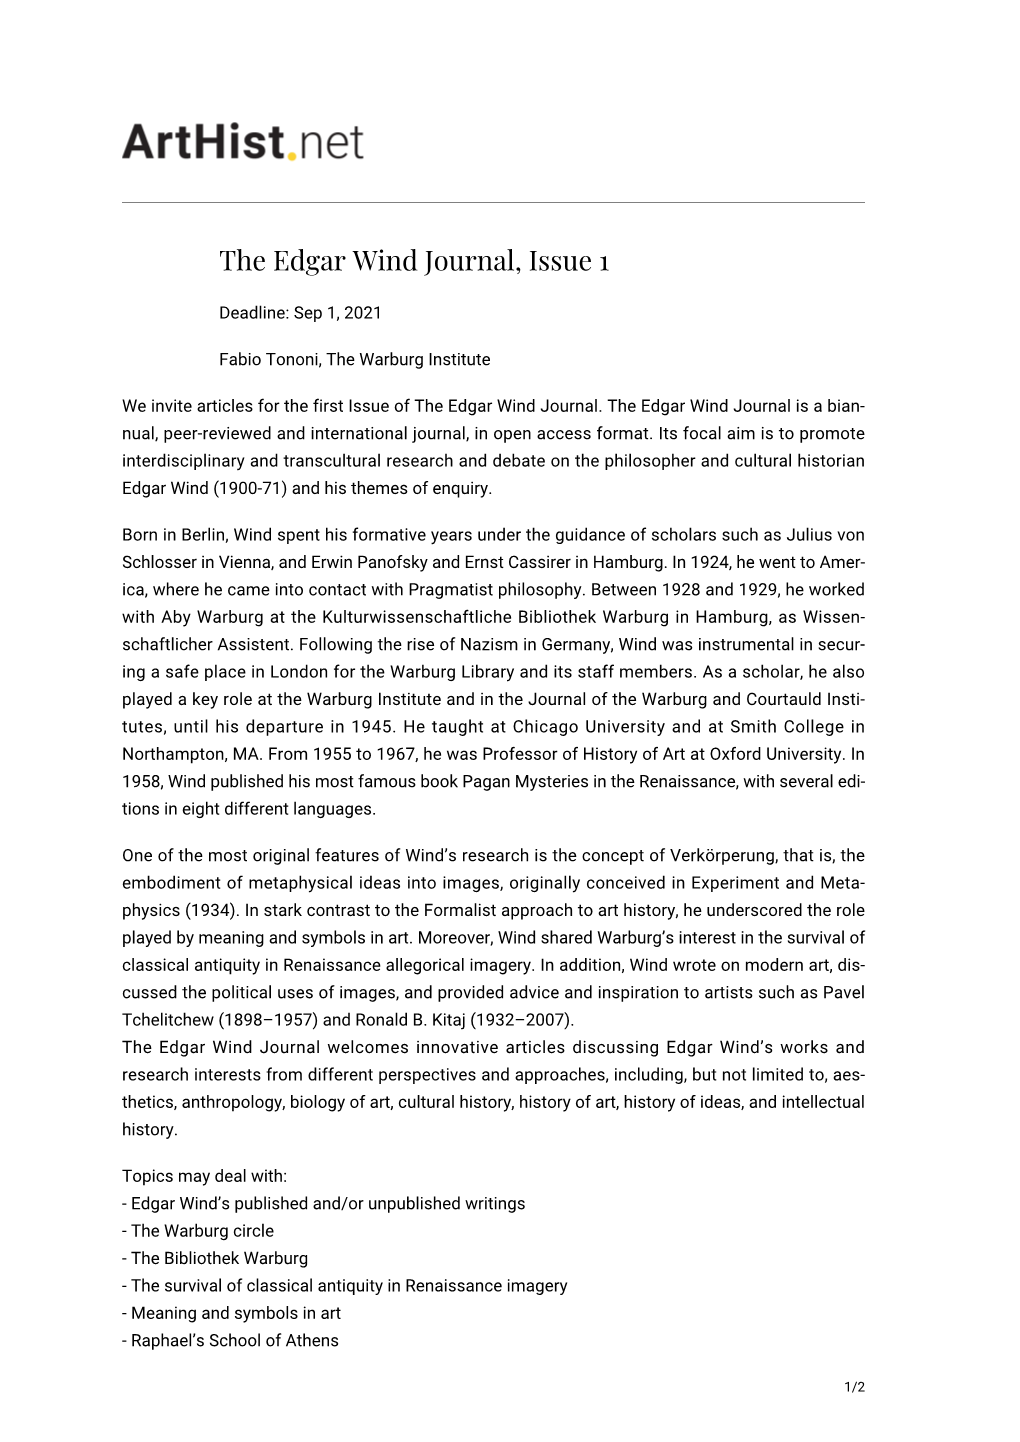 The Edgar Wind Journal, Issue 1